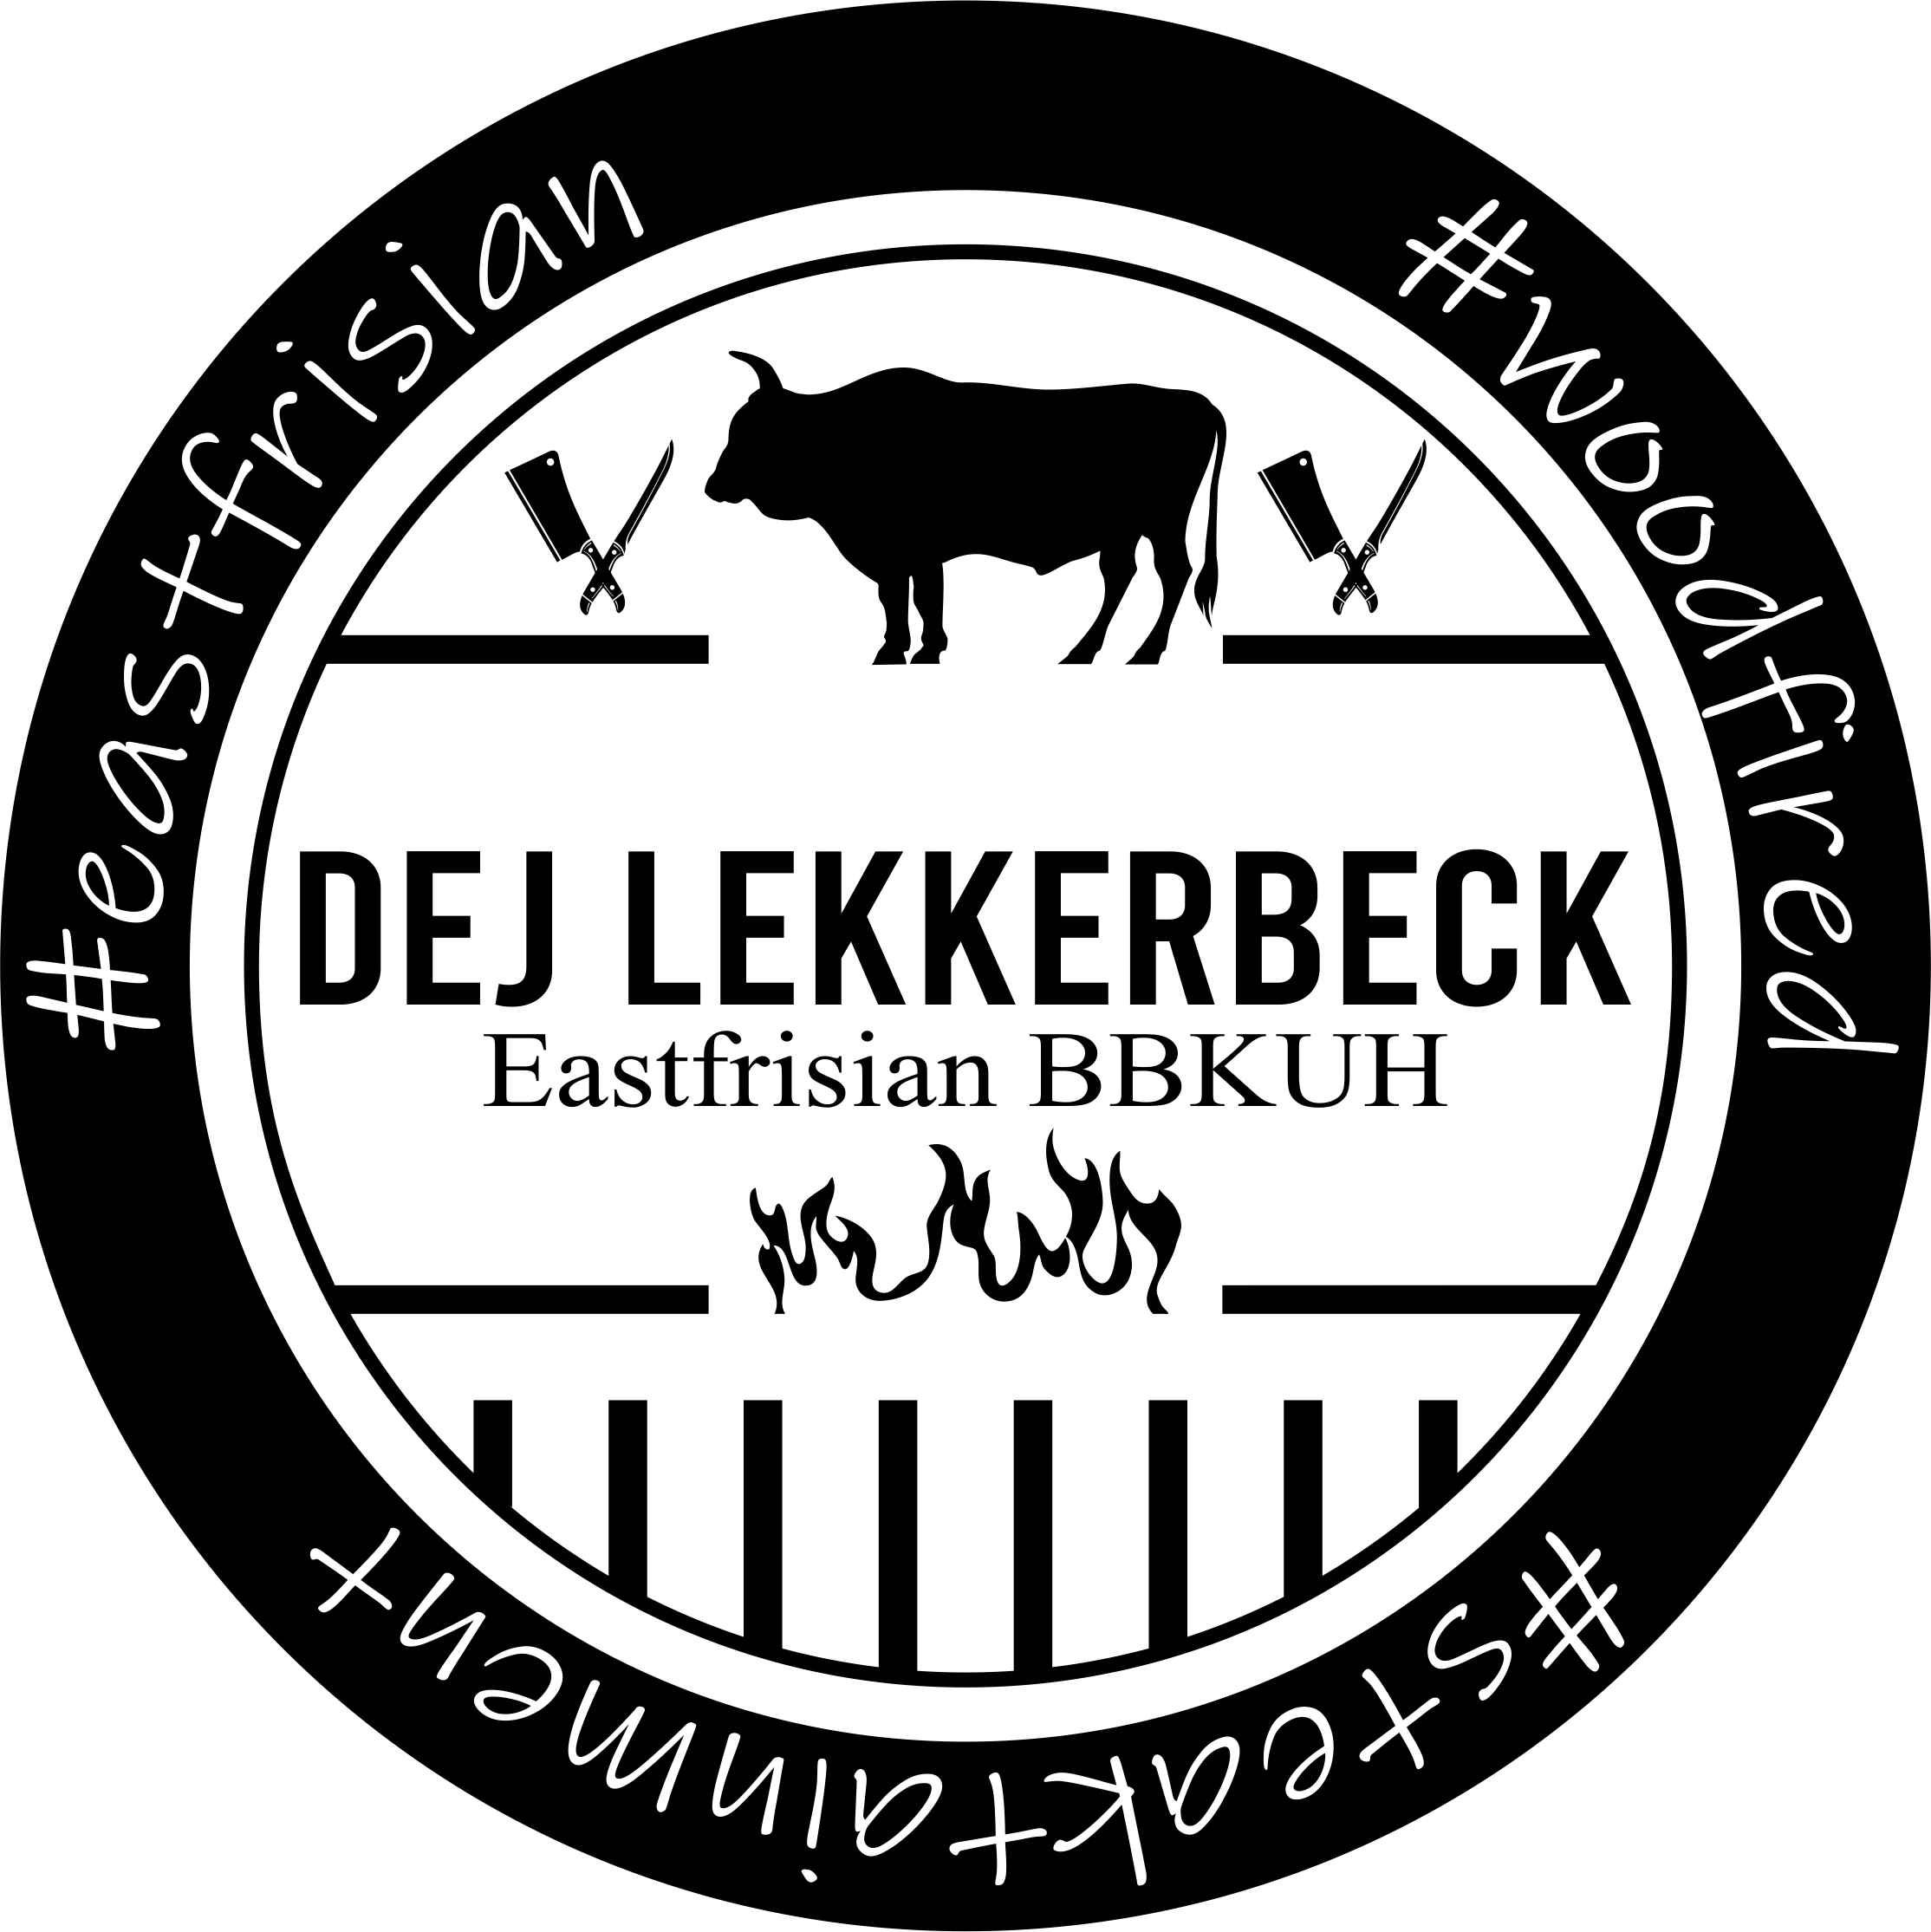 Dej Lekkerbeck - Eastfrisian BBKUH in derGenusskumpelei Logo